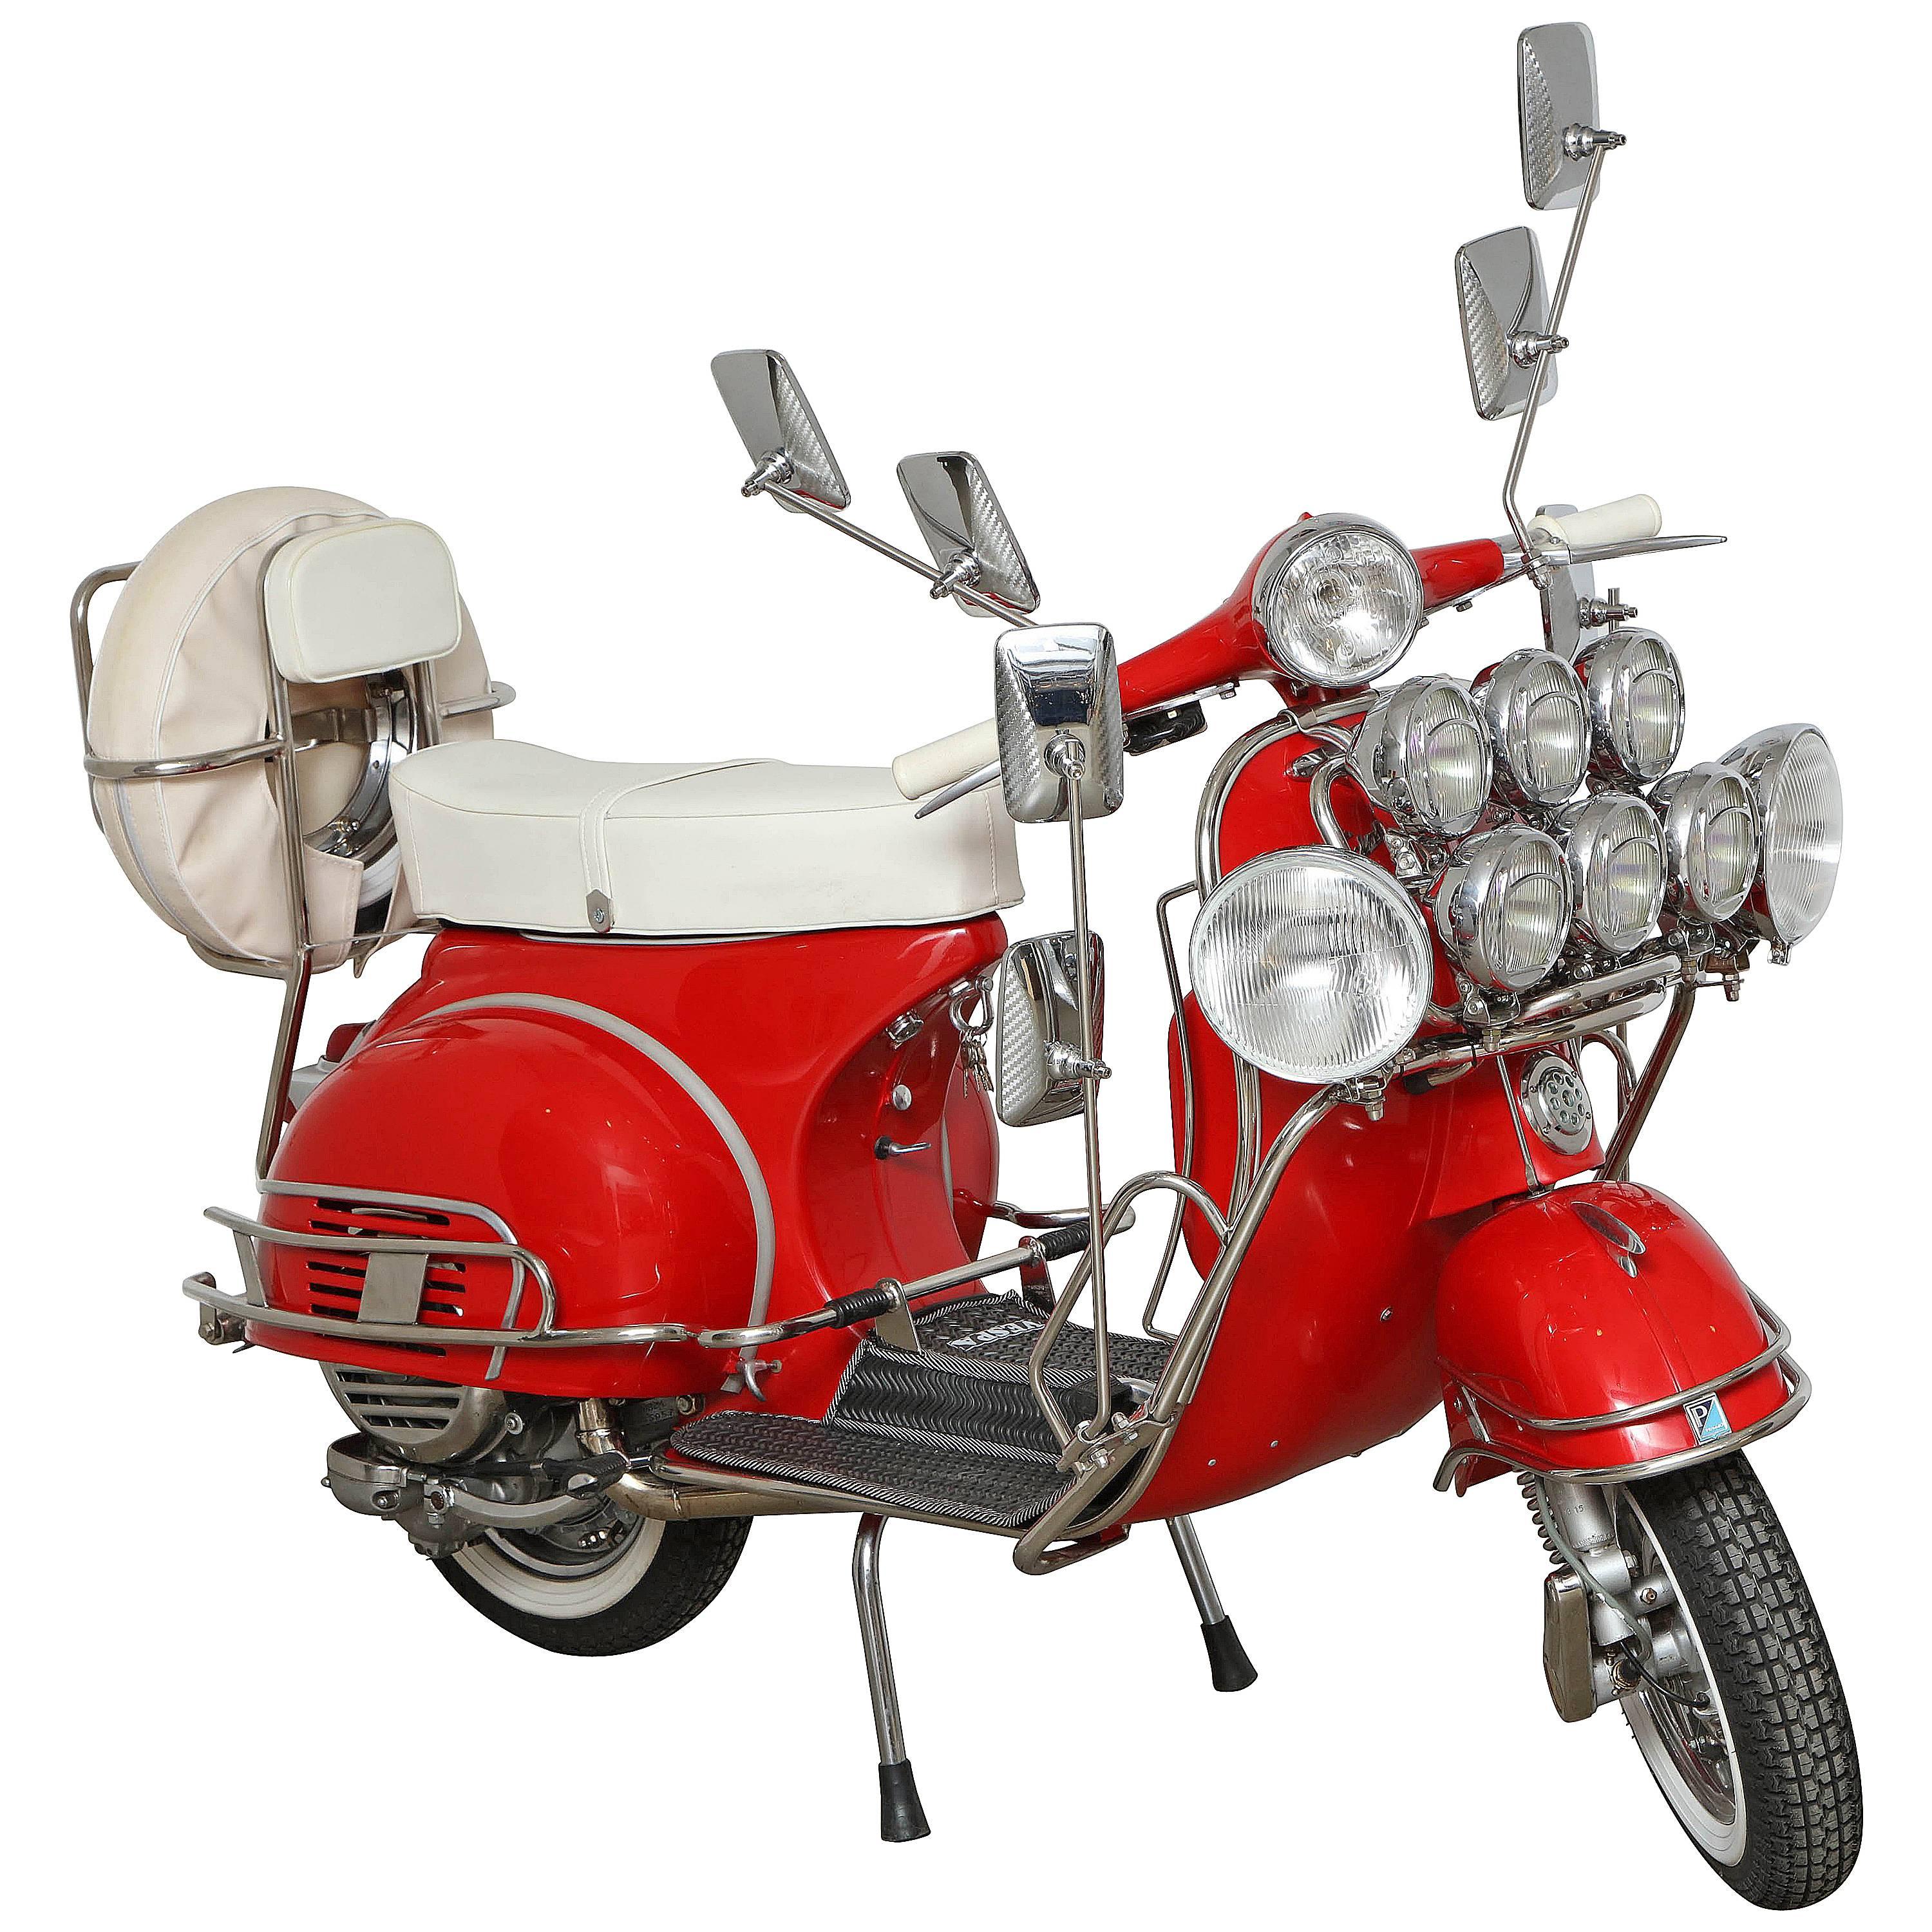 Fully Restored 1963 Red with White Leather Italian, Piaggio "Mod" Vespa